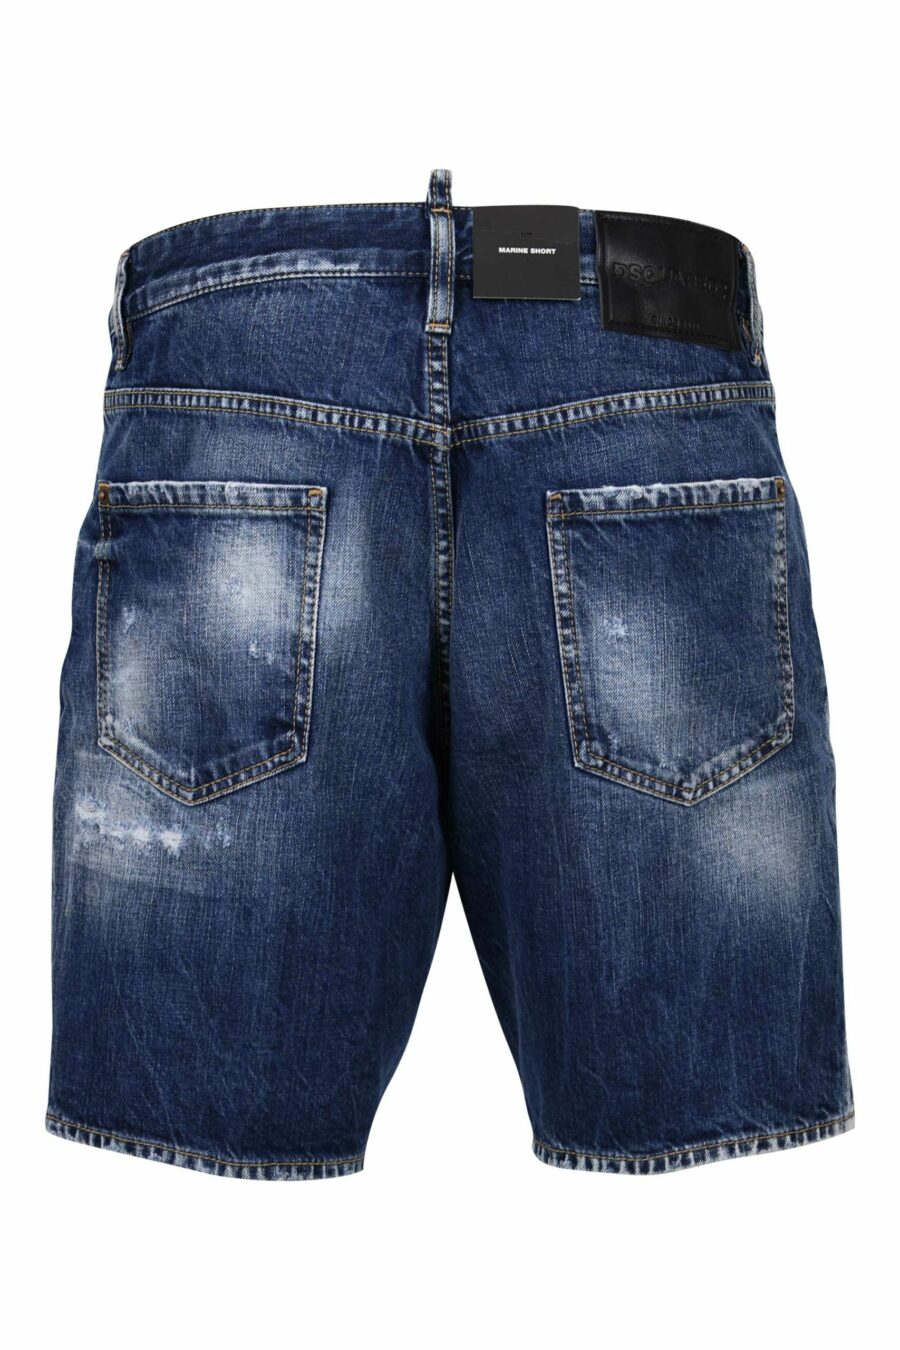 Blaue Denim-Shorts "marine short" mit rotem Logo - 8054148339920 2 skaliert